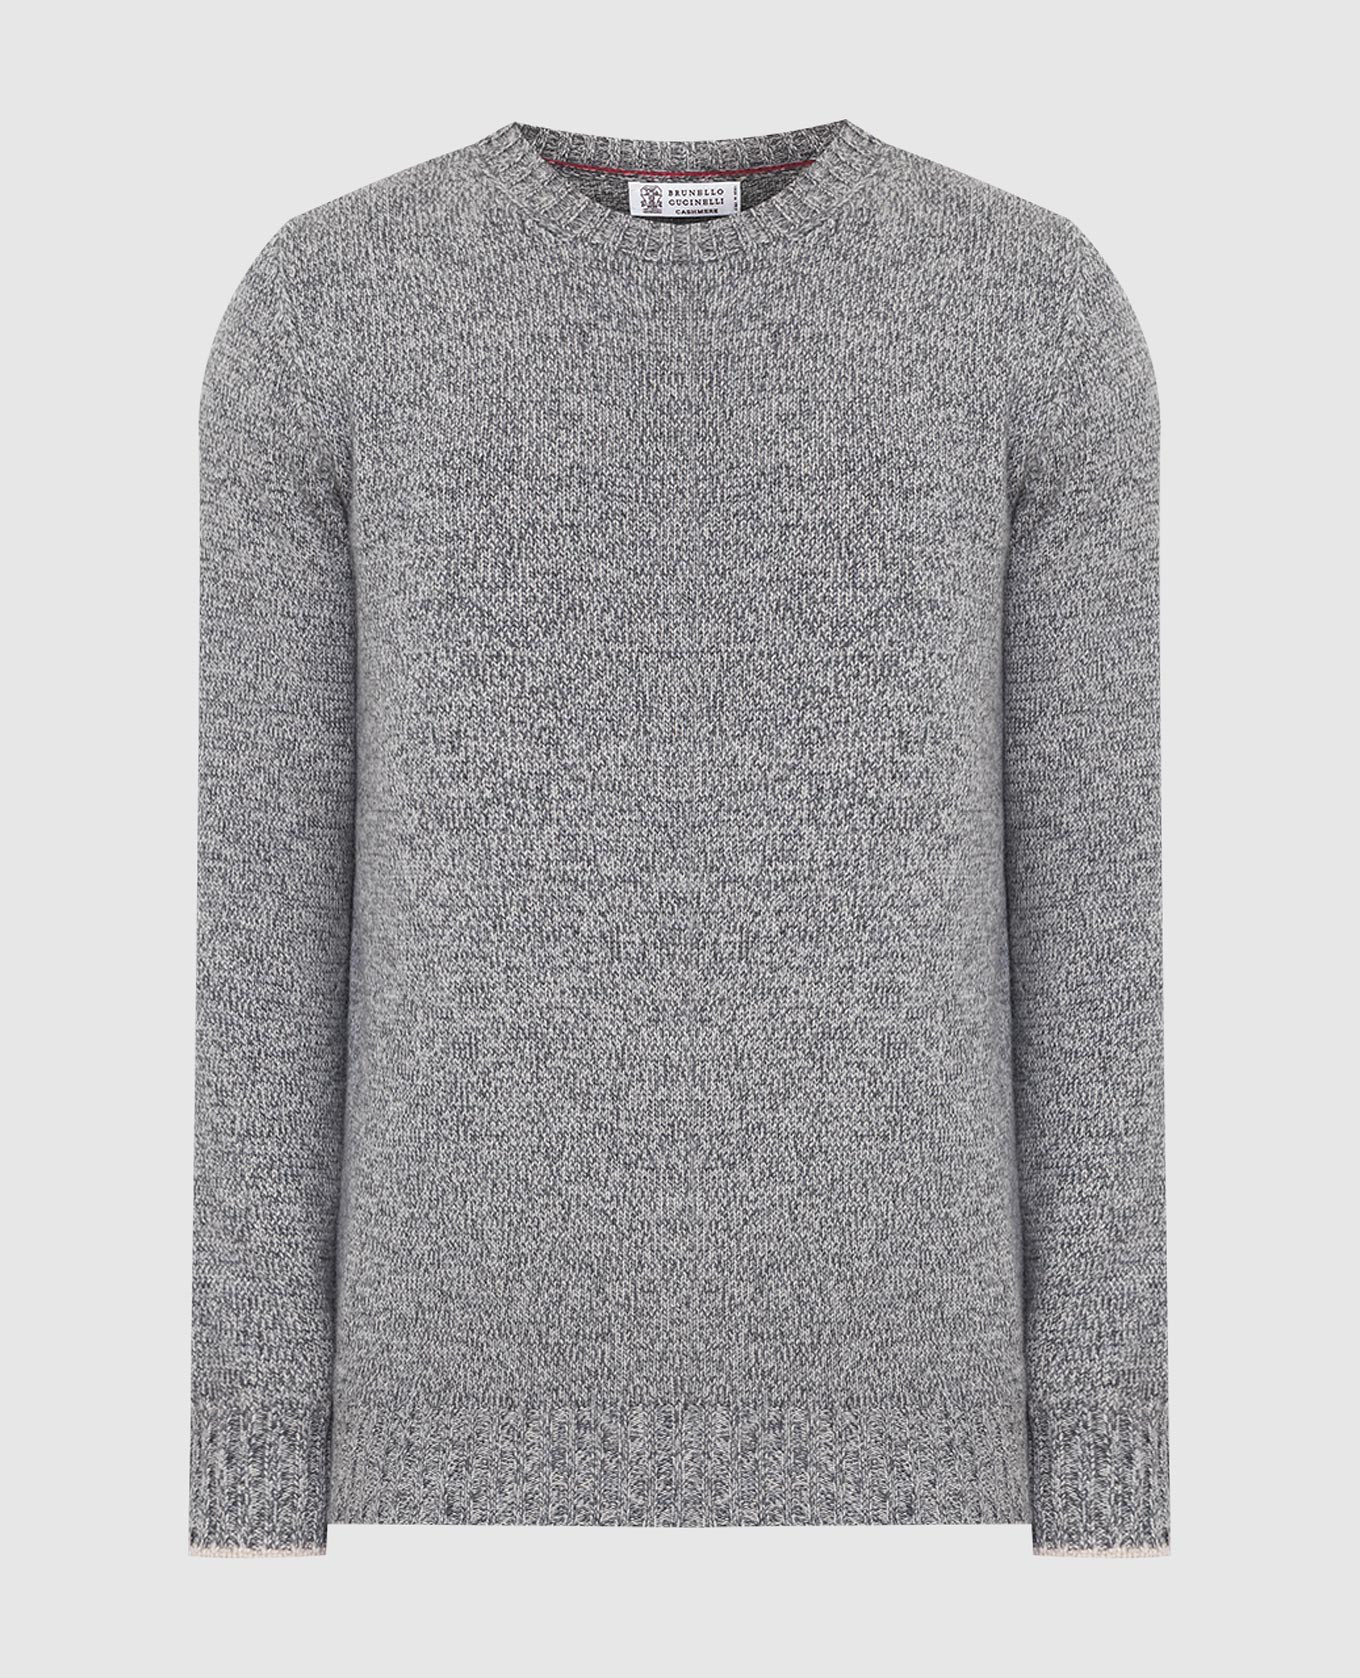 Light gray cashmere sweater